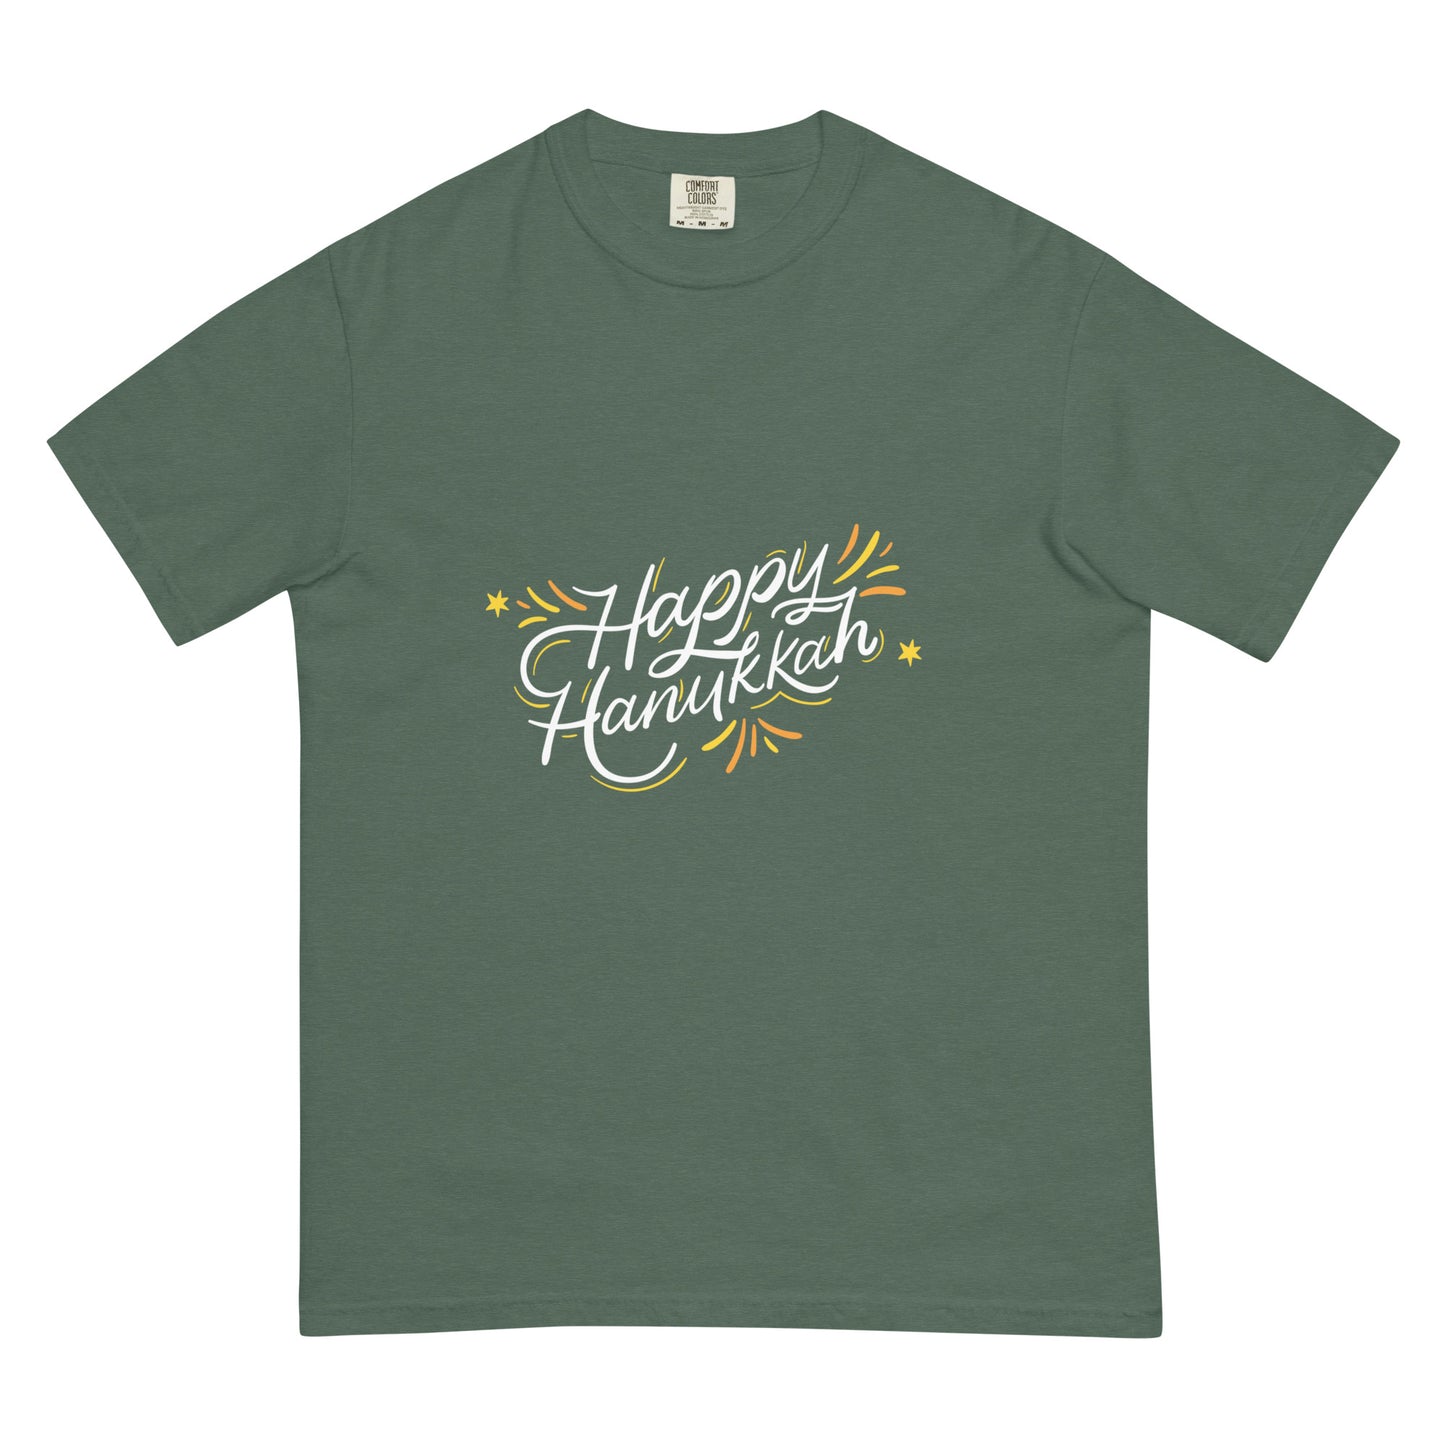 Happy Hanukkah men's t-shirt